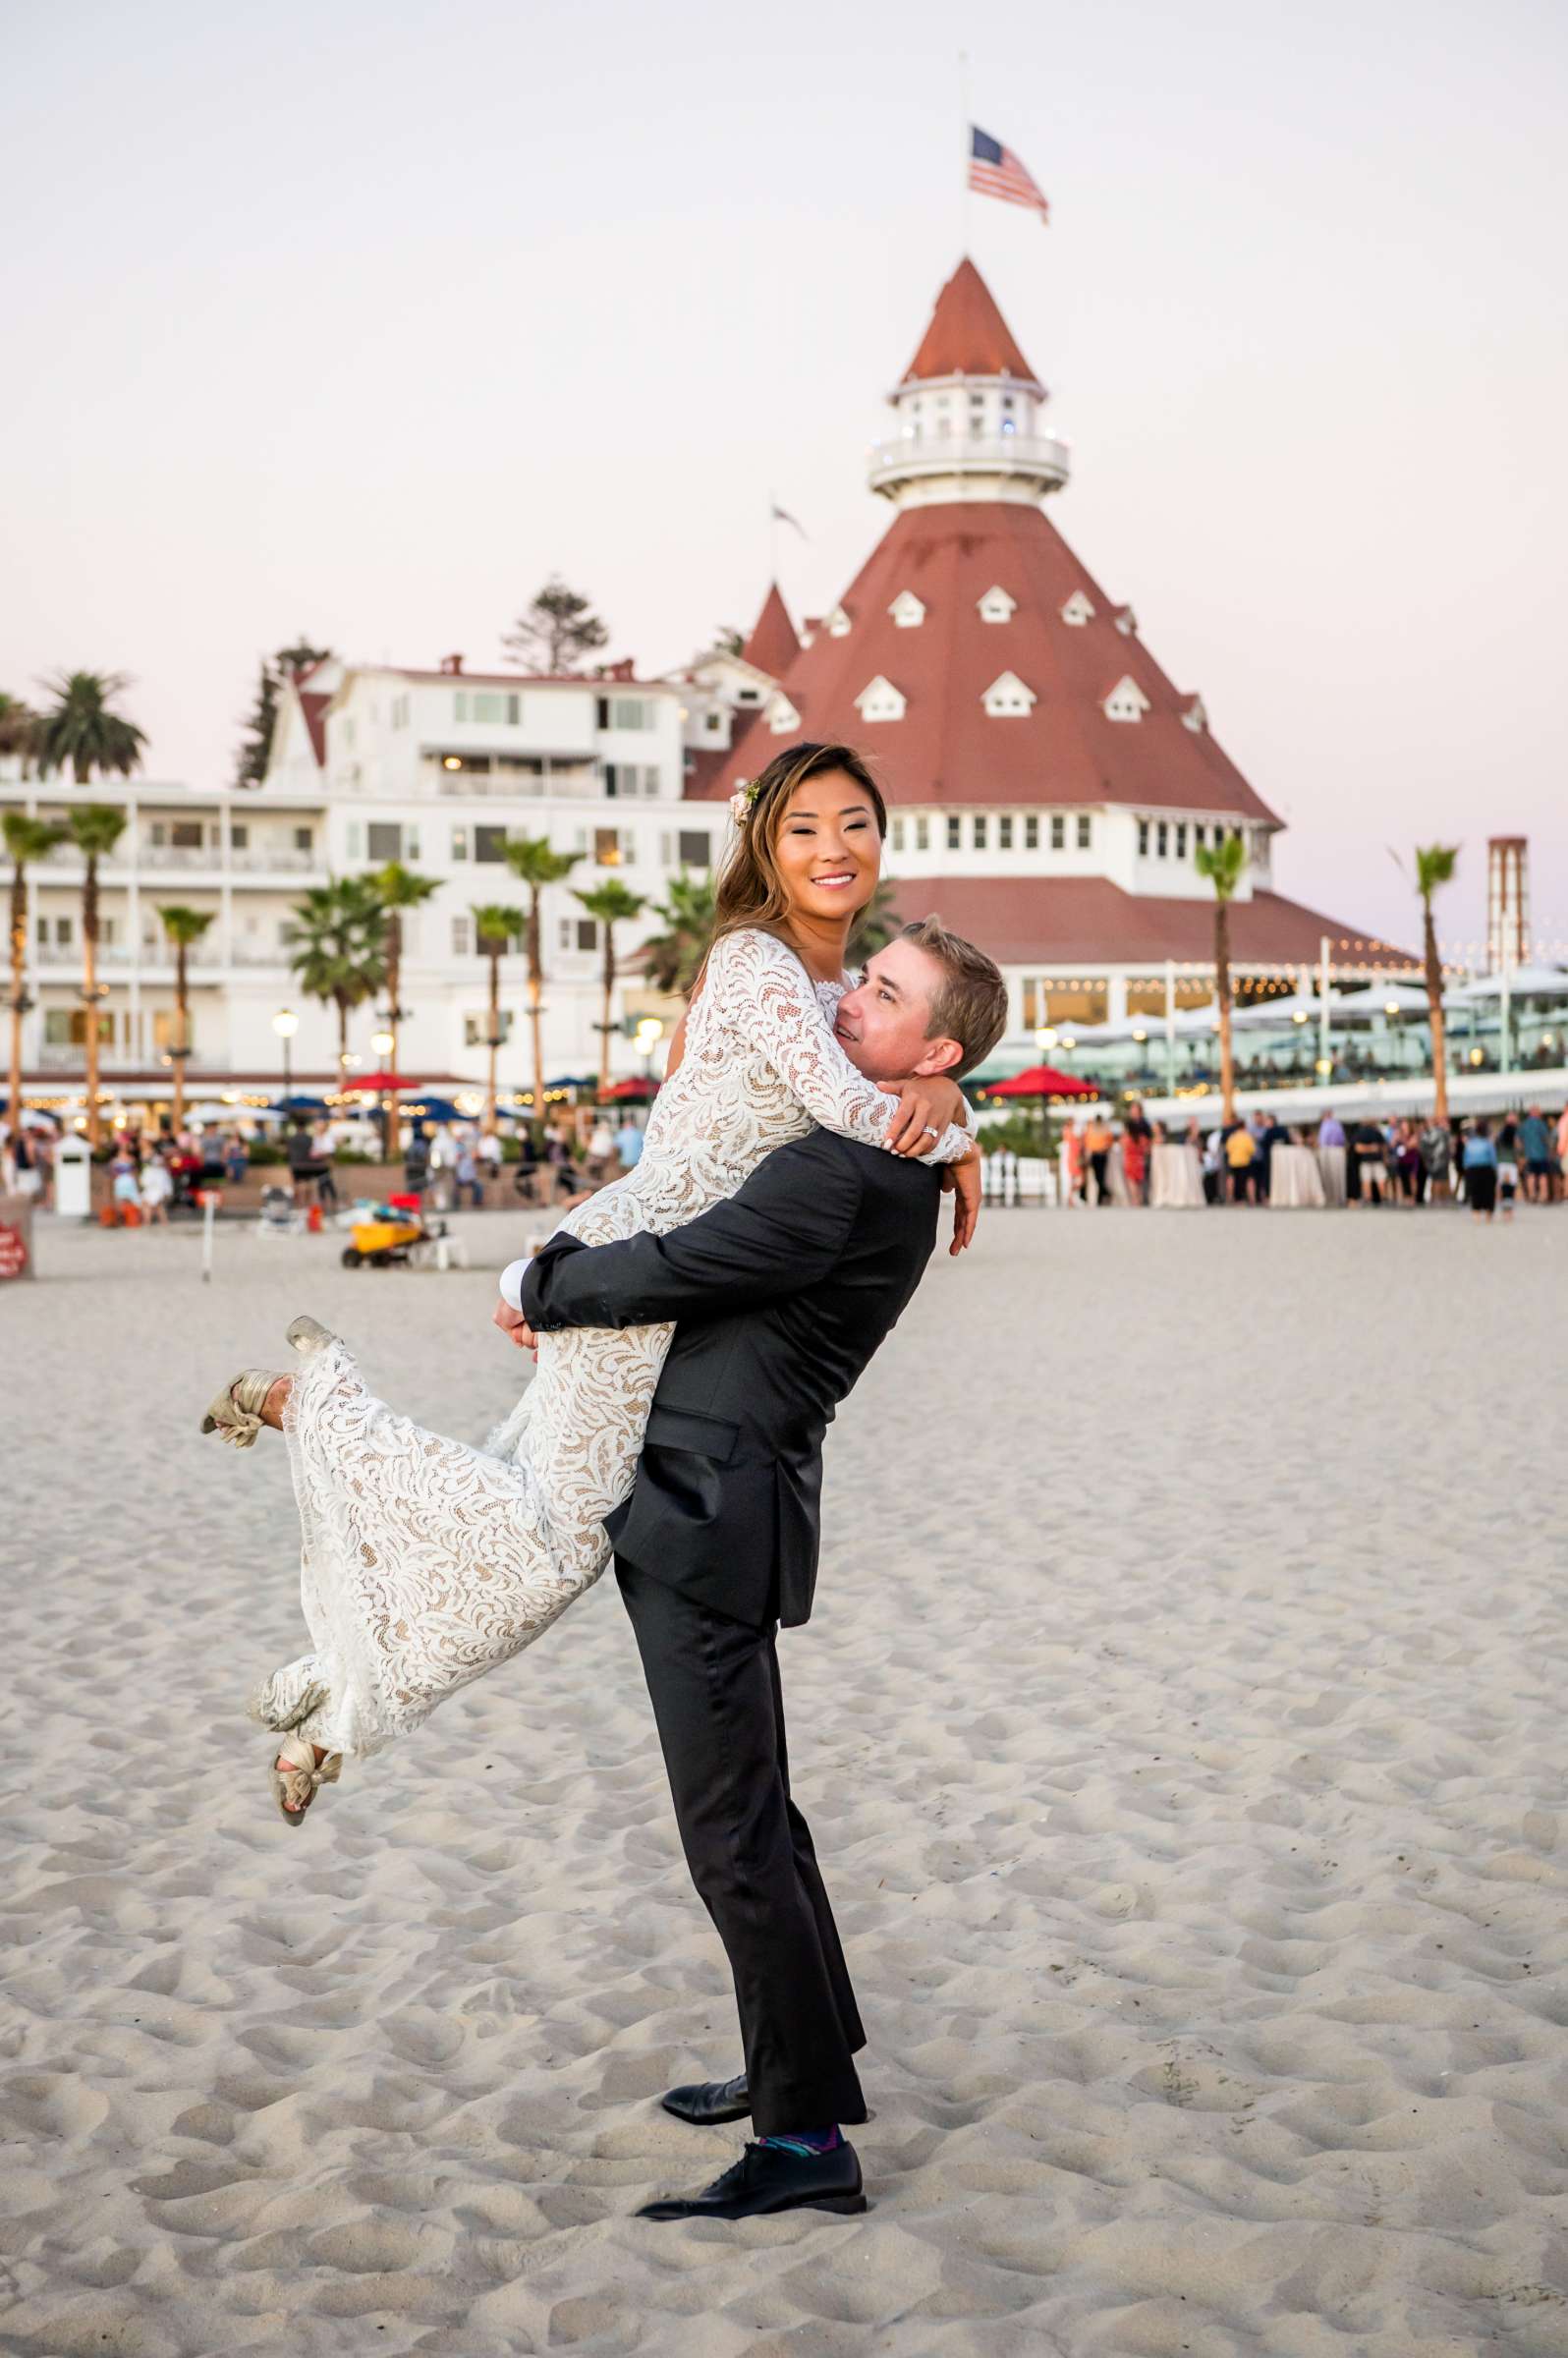 Hotel Del Coronado Wedding, Erica and Tim Wedding Photo #5 by True Photography